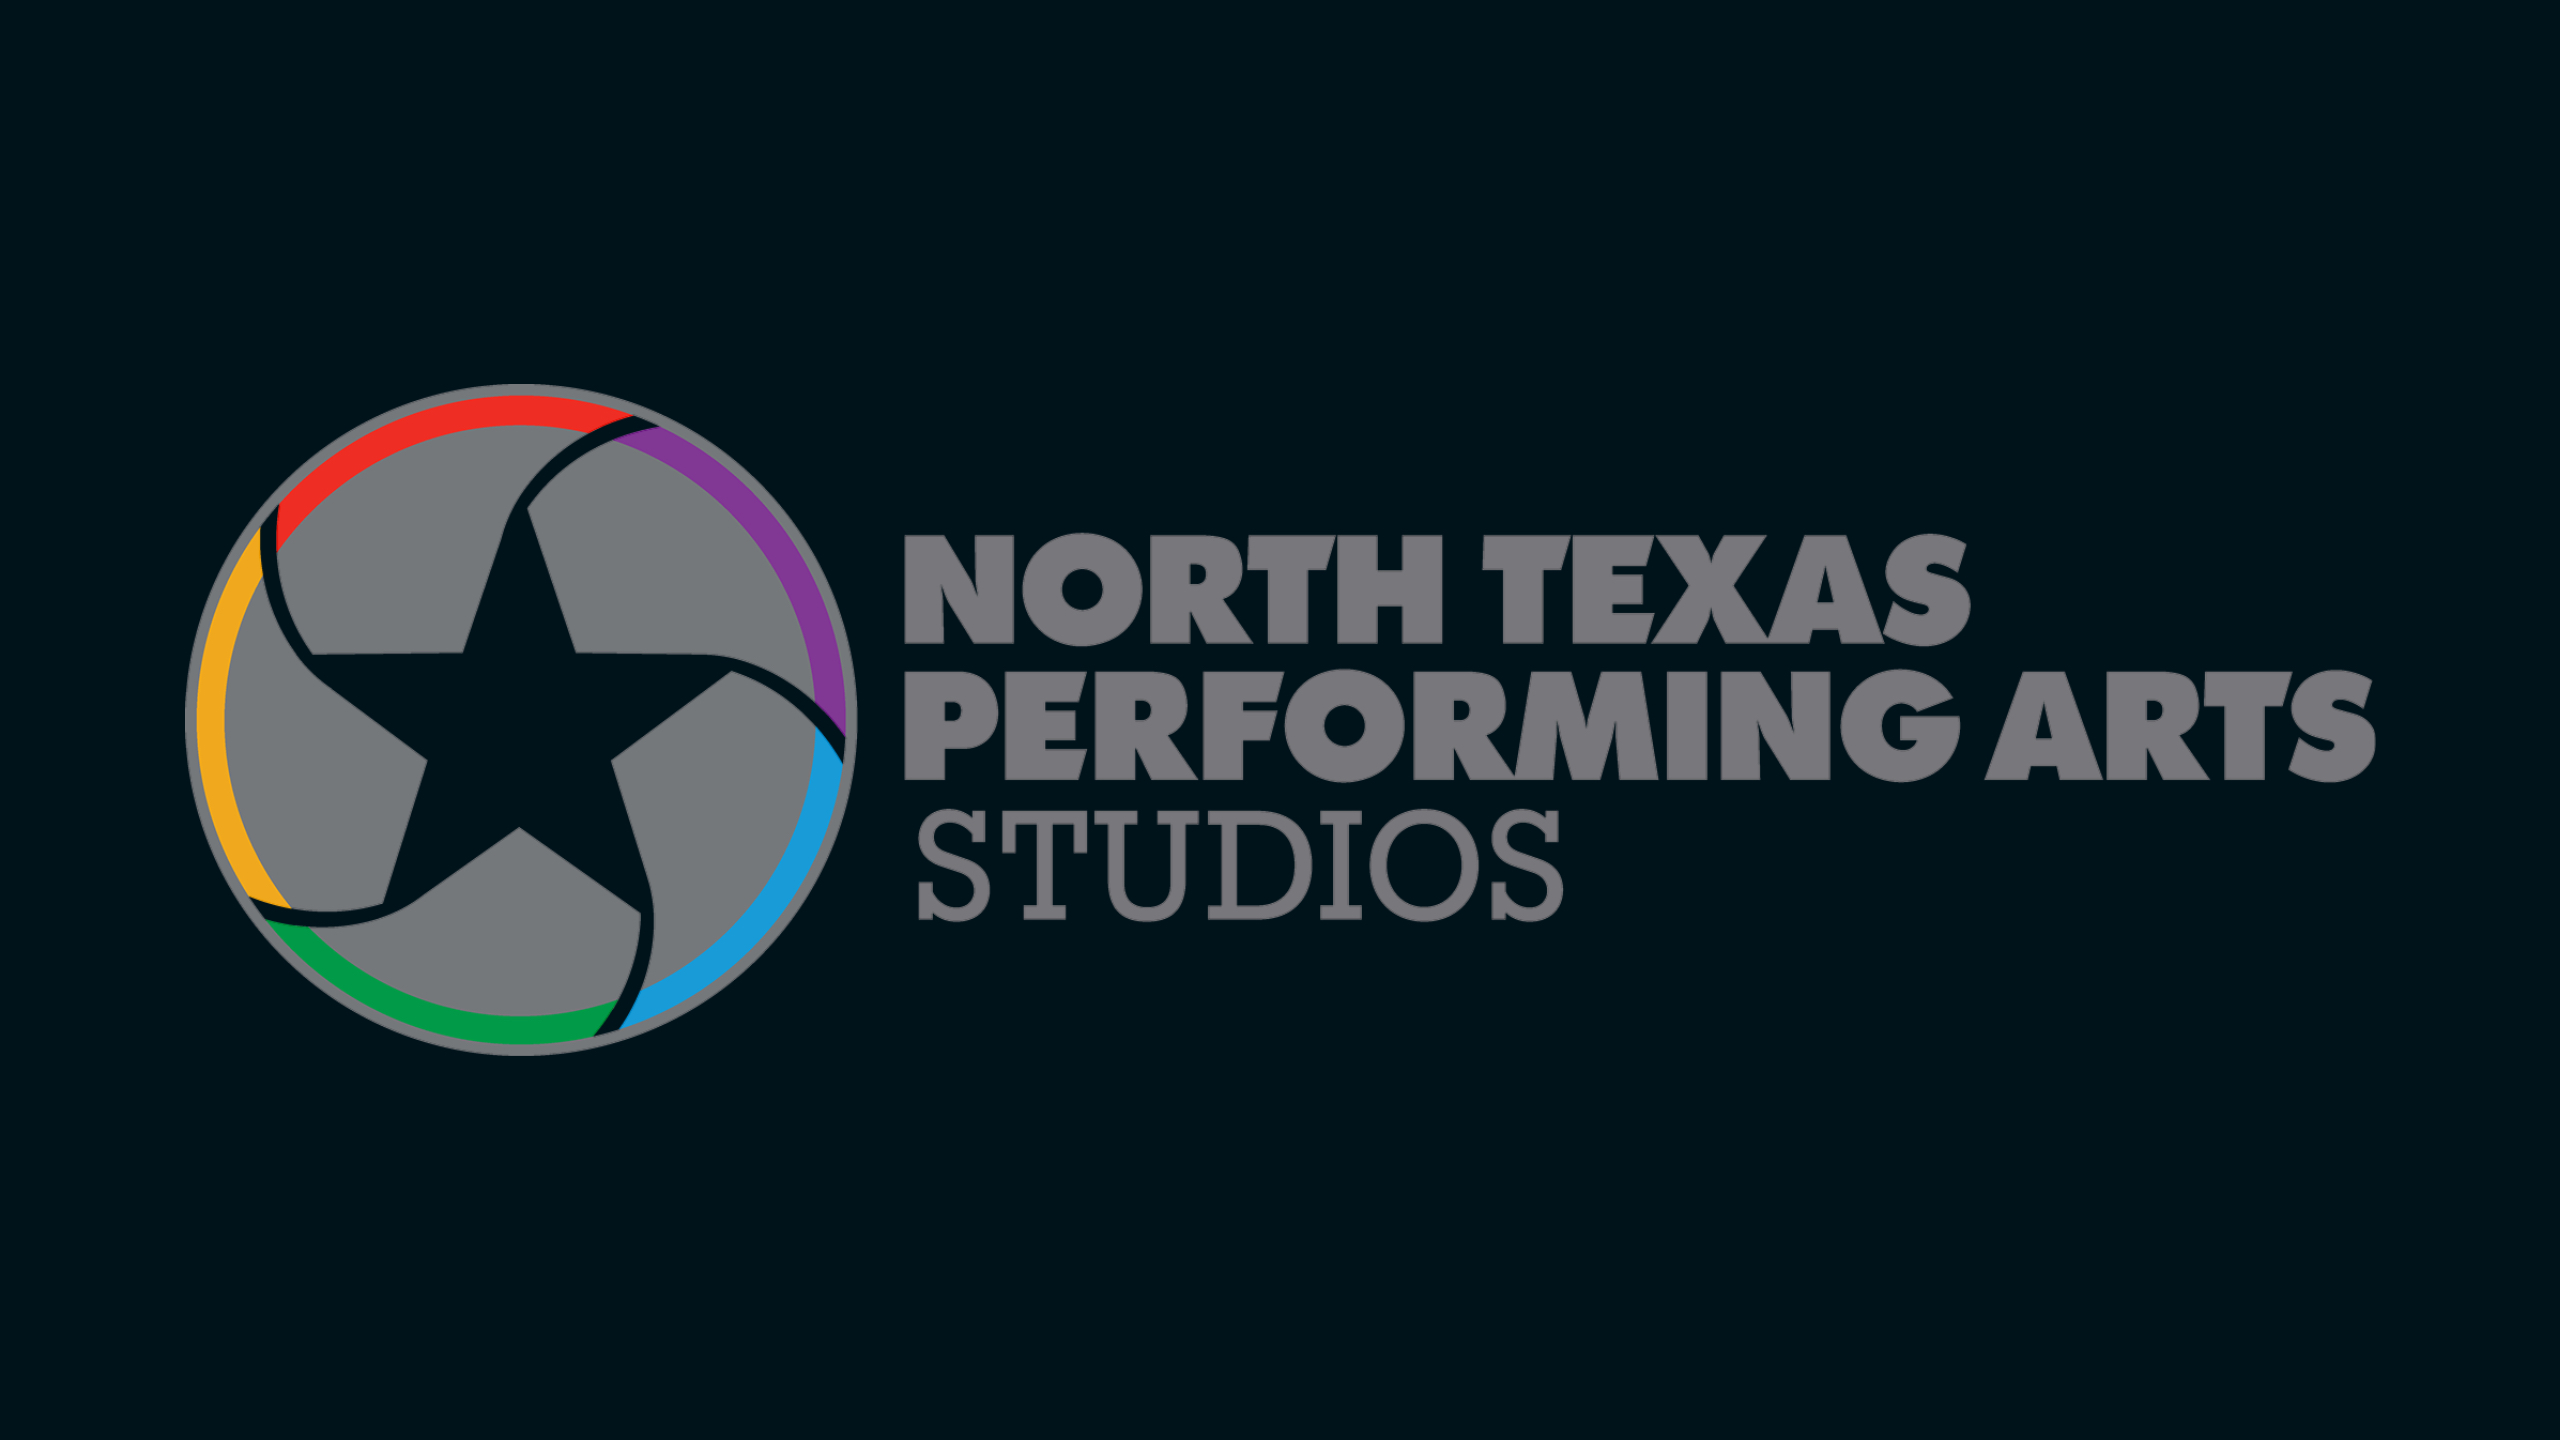 NTPA Studios logo on black background